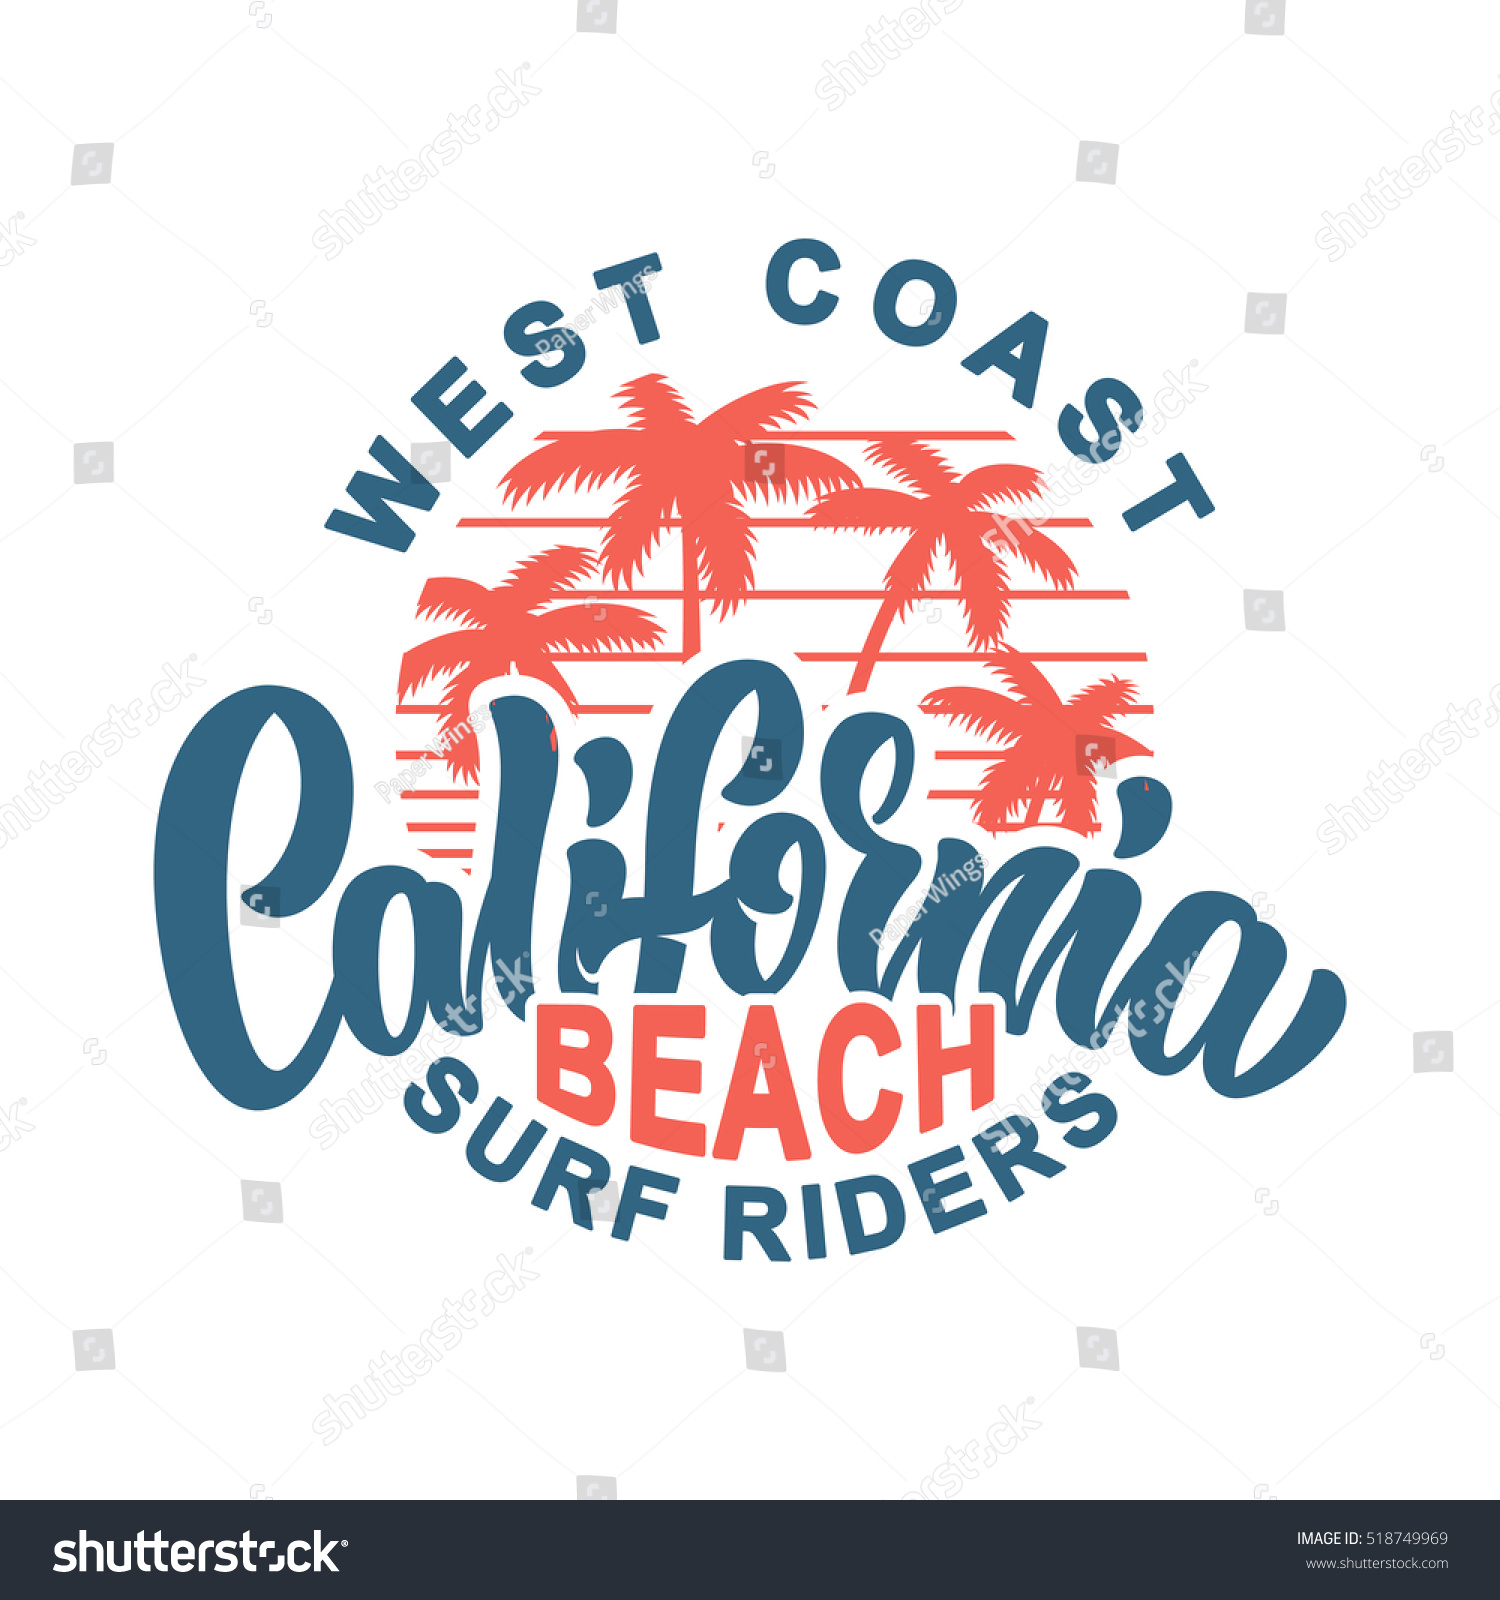 California Beach Surf Riders Vector Illustration Stock Vector 518749969 ...